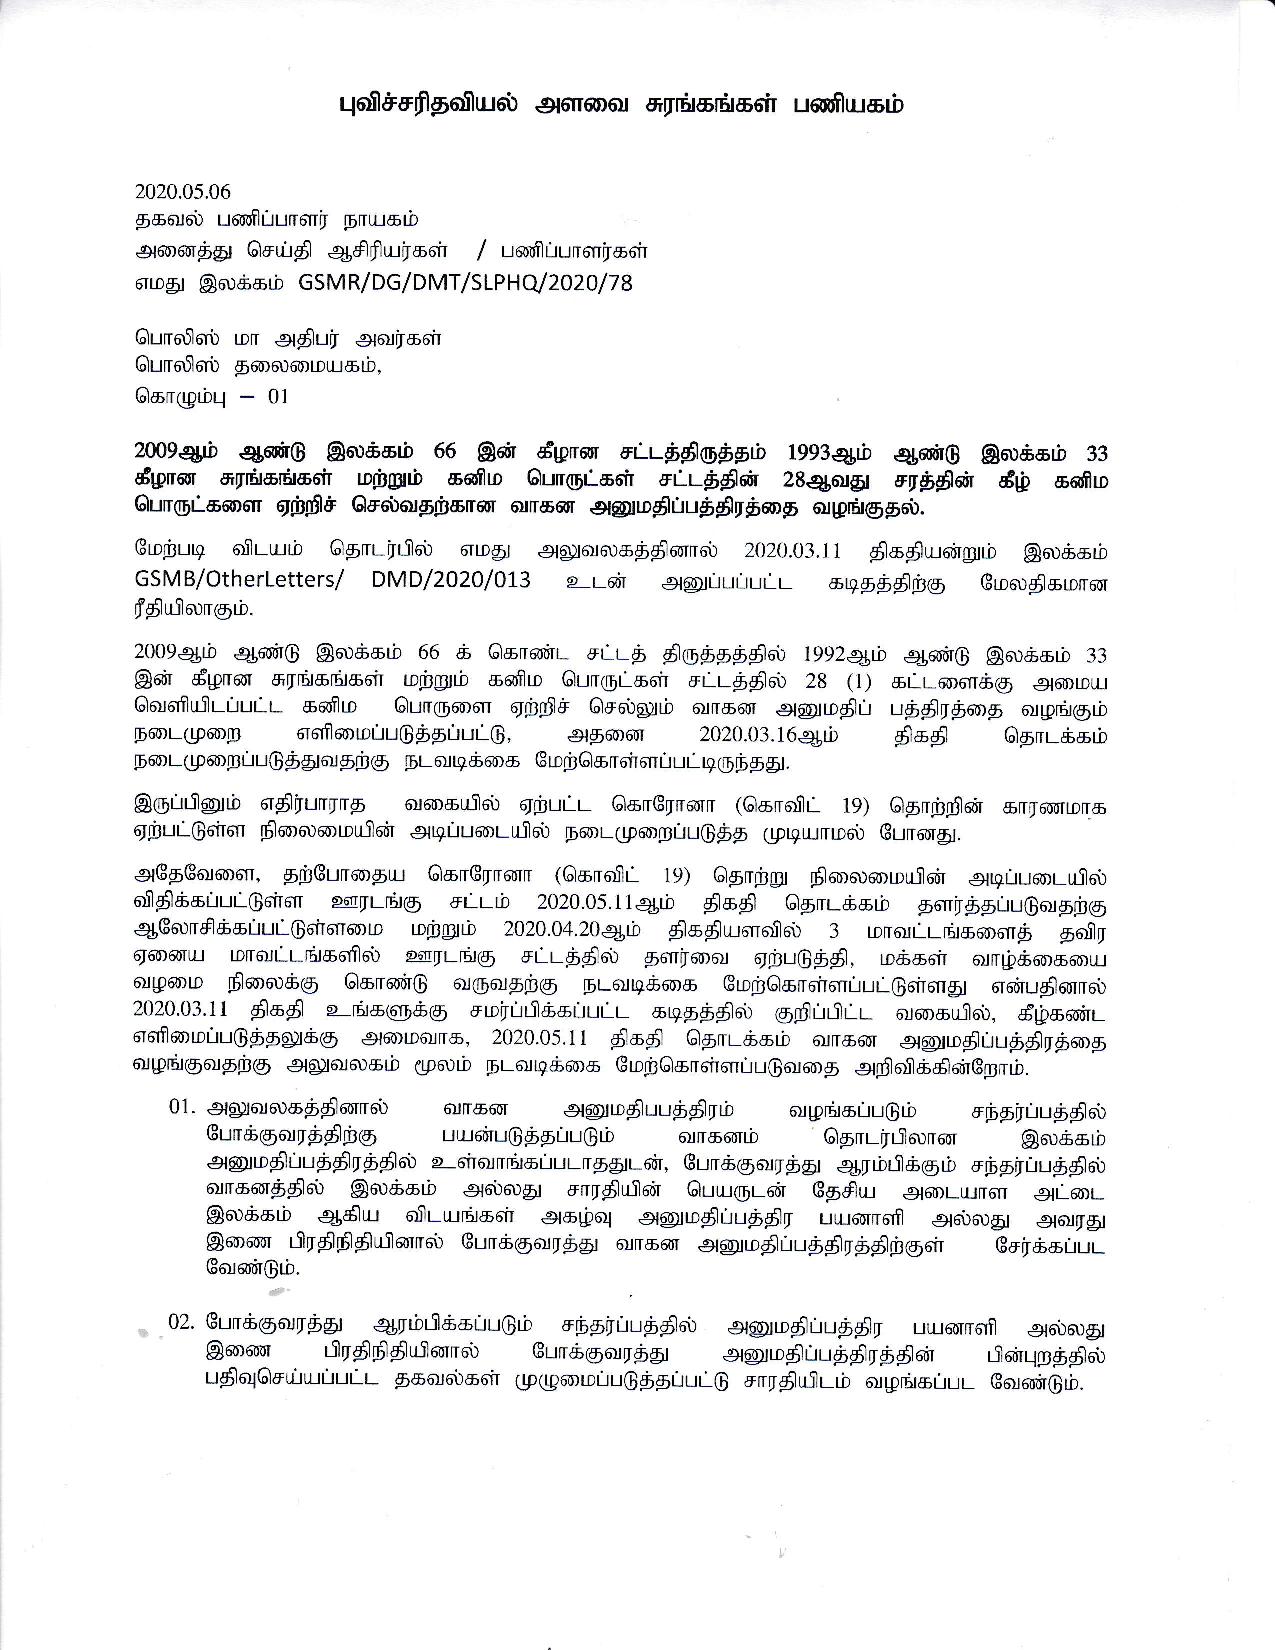 Tamil page 002 Copy